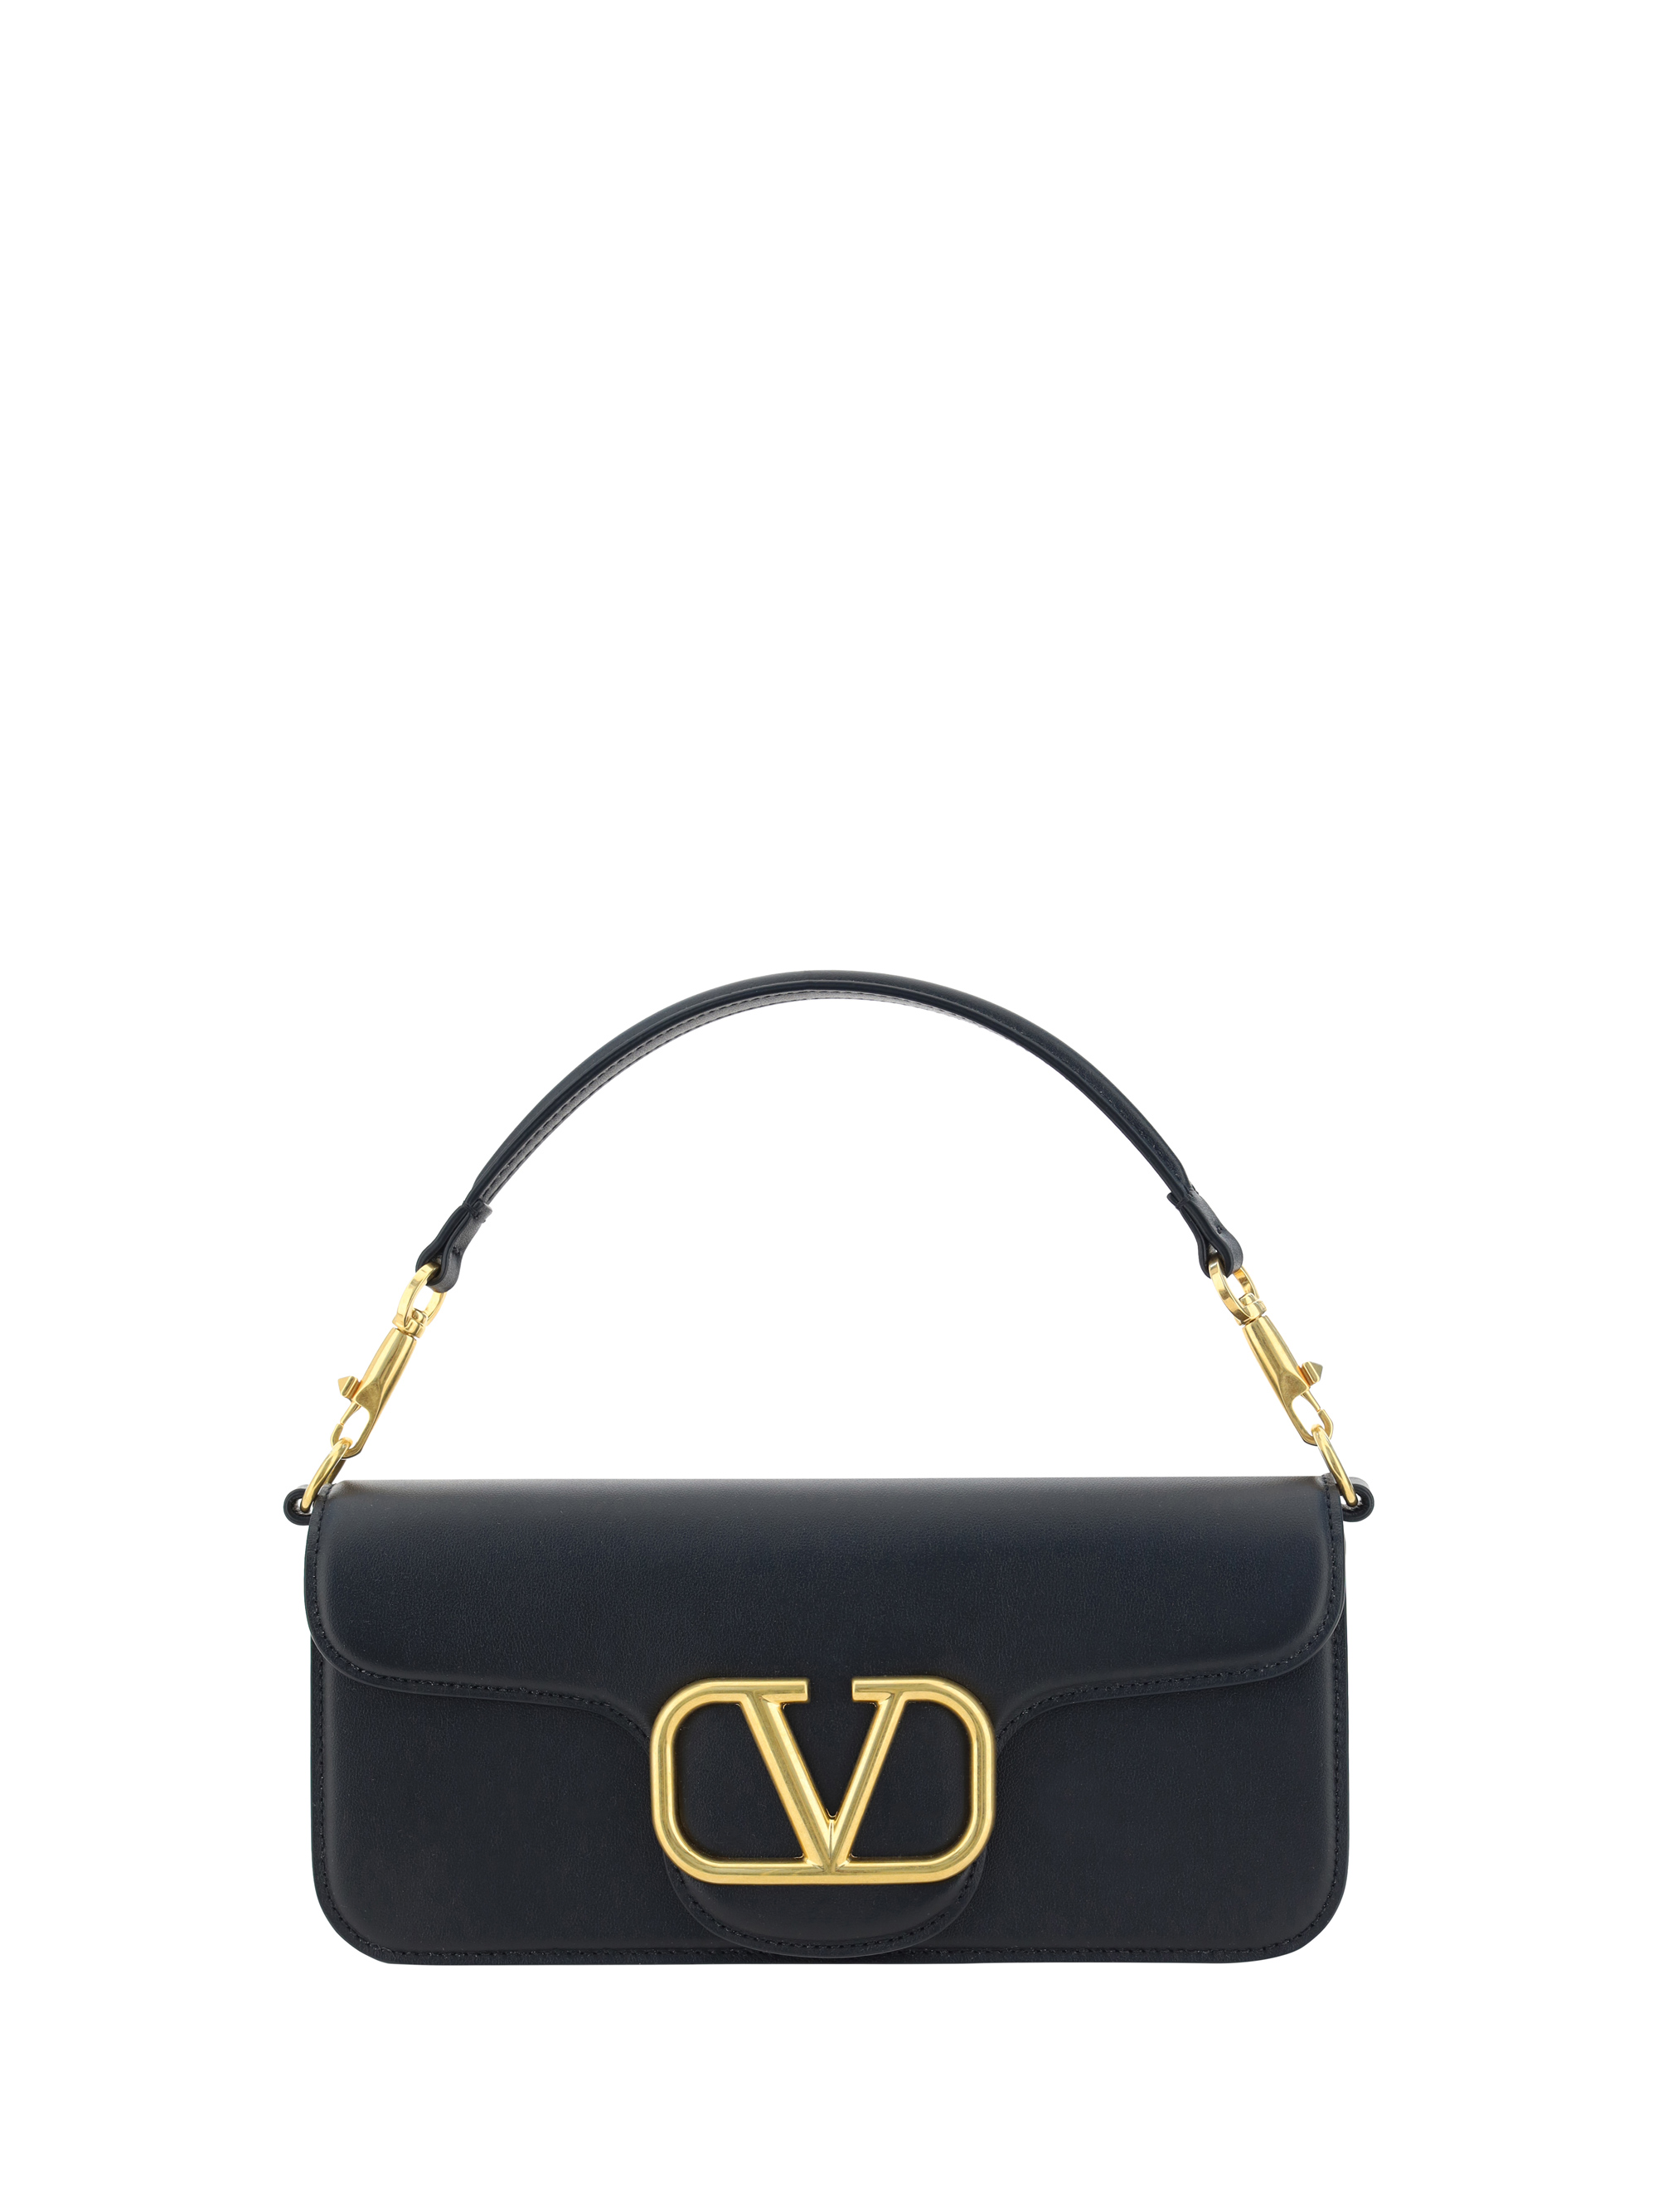 Valentino Garavani Locò Bag in Leather with Logo